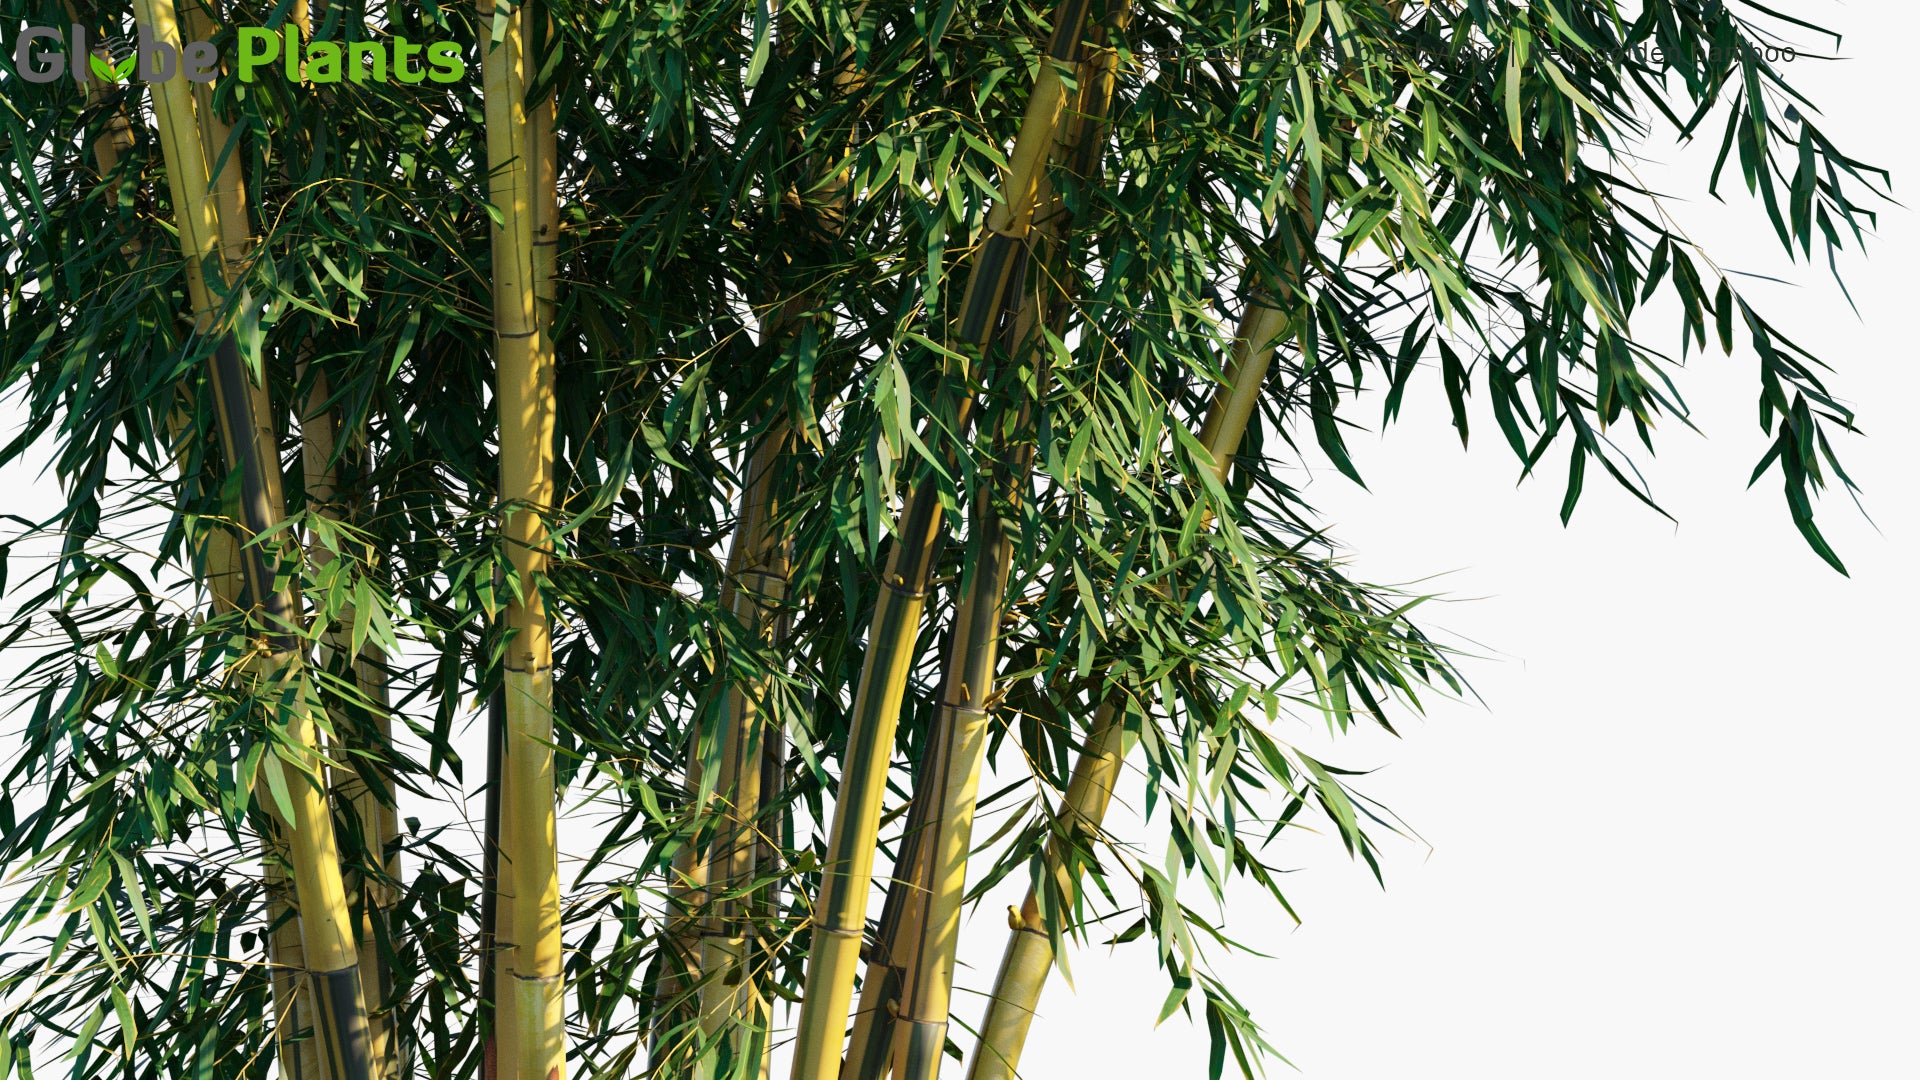 Schizostachyum Brachyllum - New Golden Bamboo, Philippines Construction Bamboo, Pure Yellow Bamboo